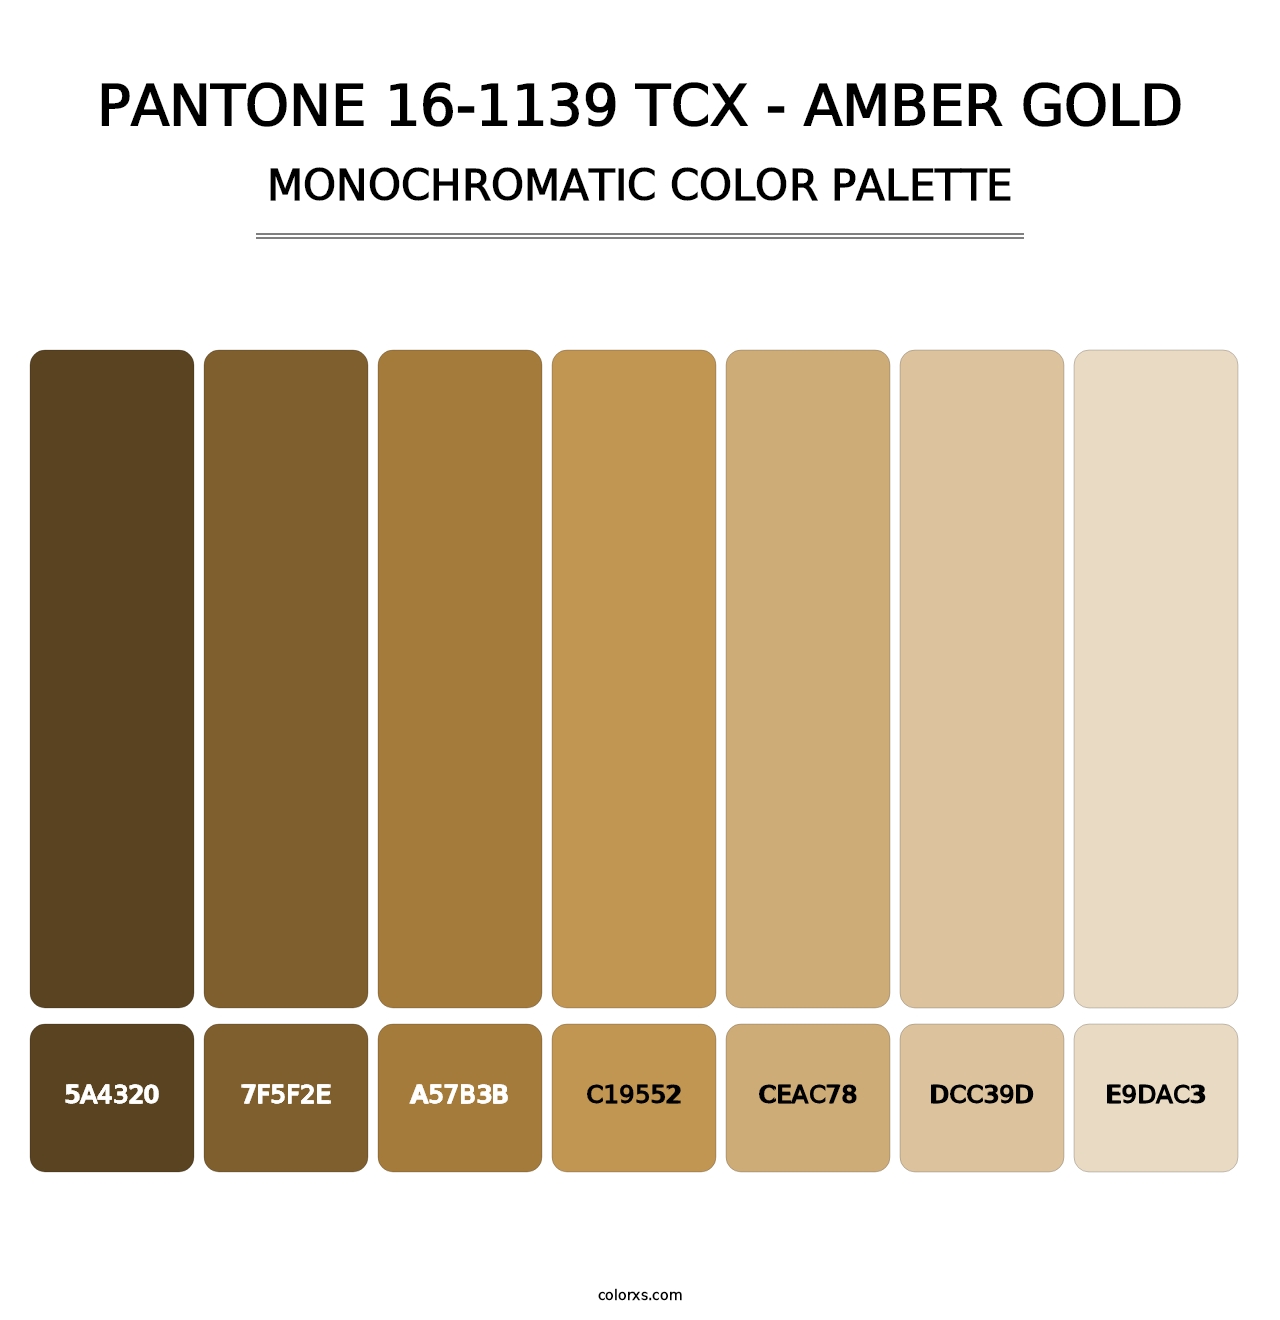 PANTONE 16-1139 TCX - Amber Gold - Monochromatic Color Palette